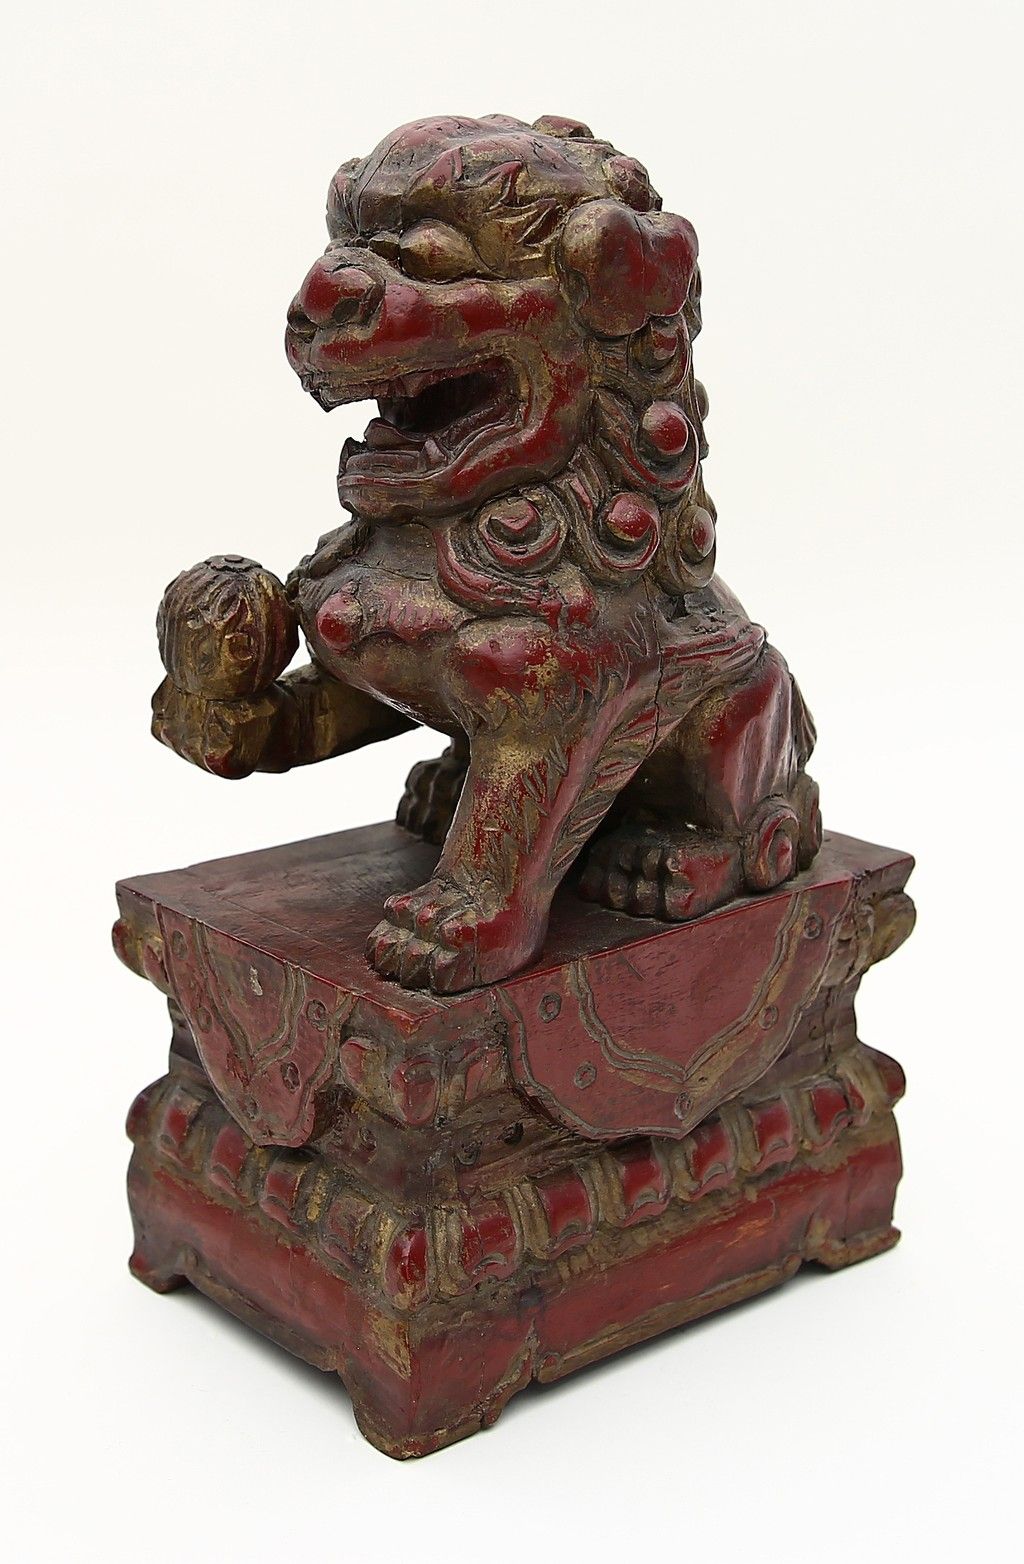 Sitzender Fo-Hund auf Podest. 木质，雕刻。红色漆面，有以前部分镀金的残留物。有岁月的痕迹和应力裂纹。中国，19世纪，高31厘米。